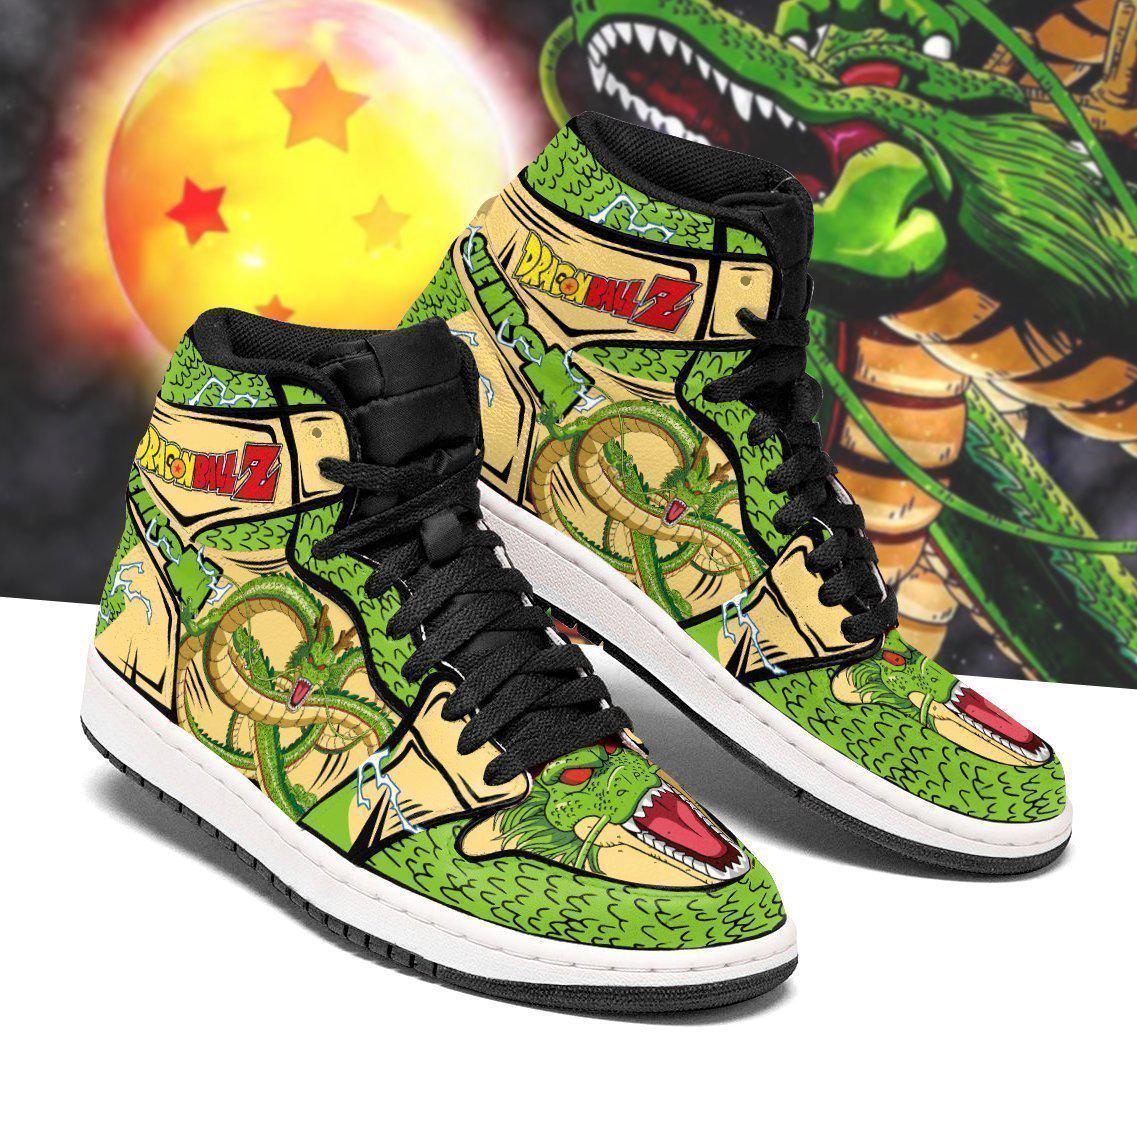 shenron shoes boots dragon ball z anime jordan sneakers fan gift mn04 gearanime - DBZ Shop